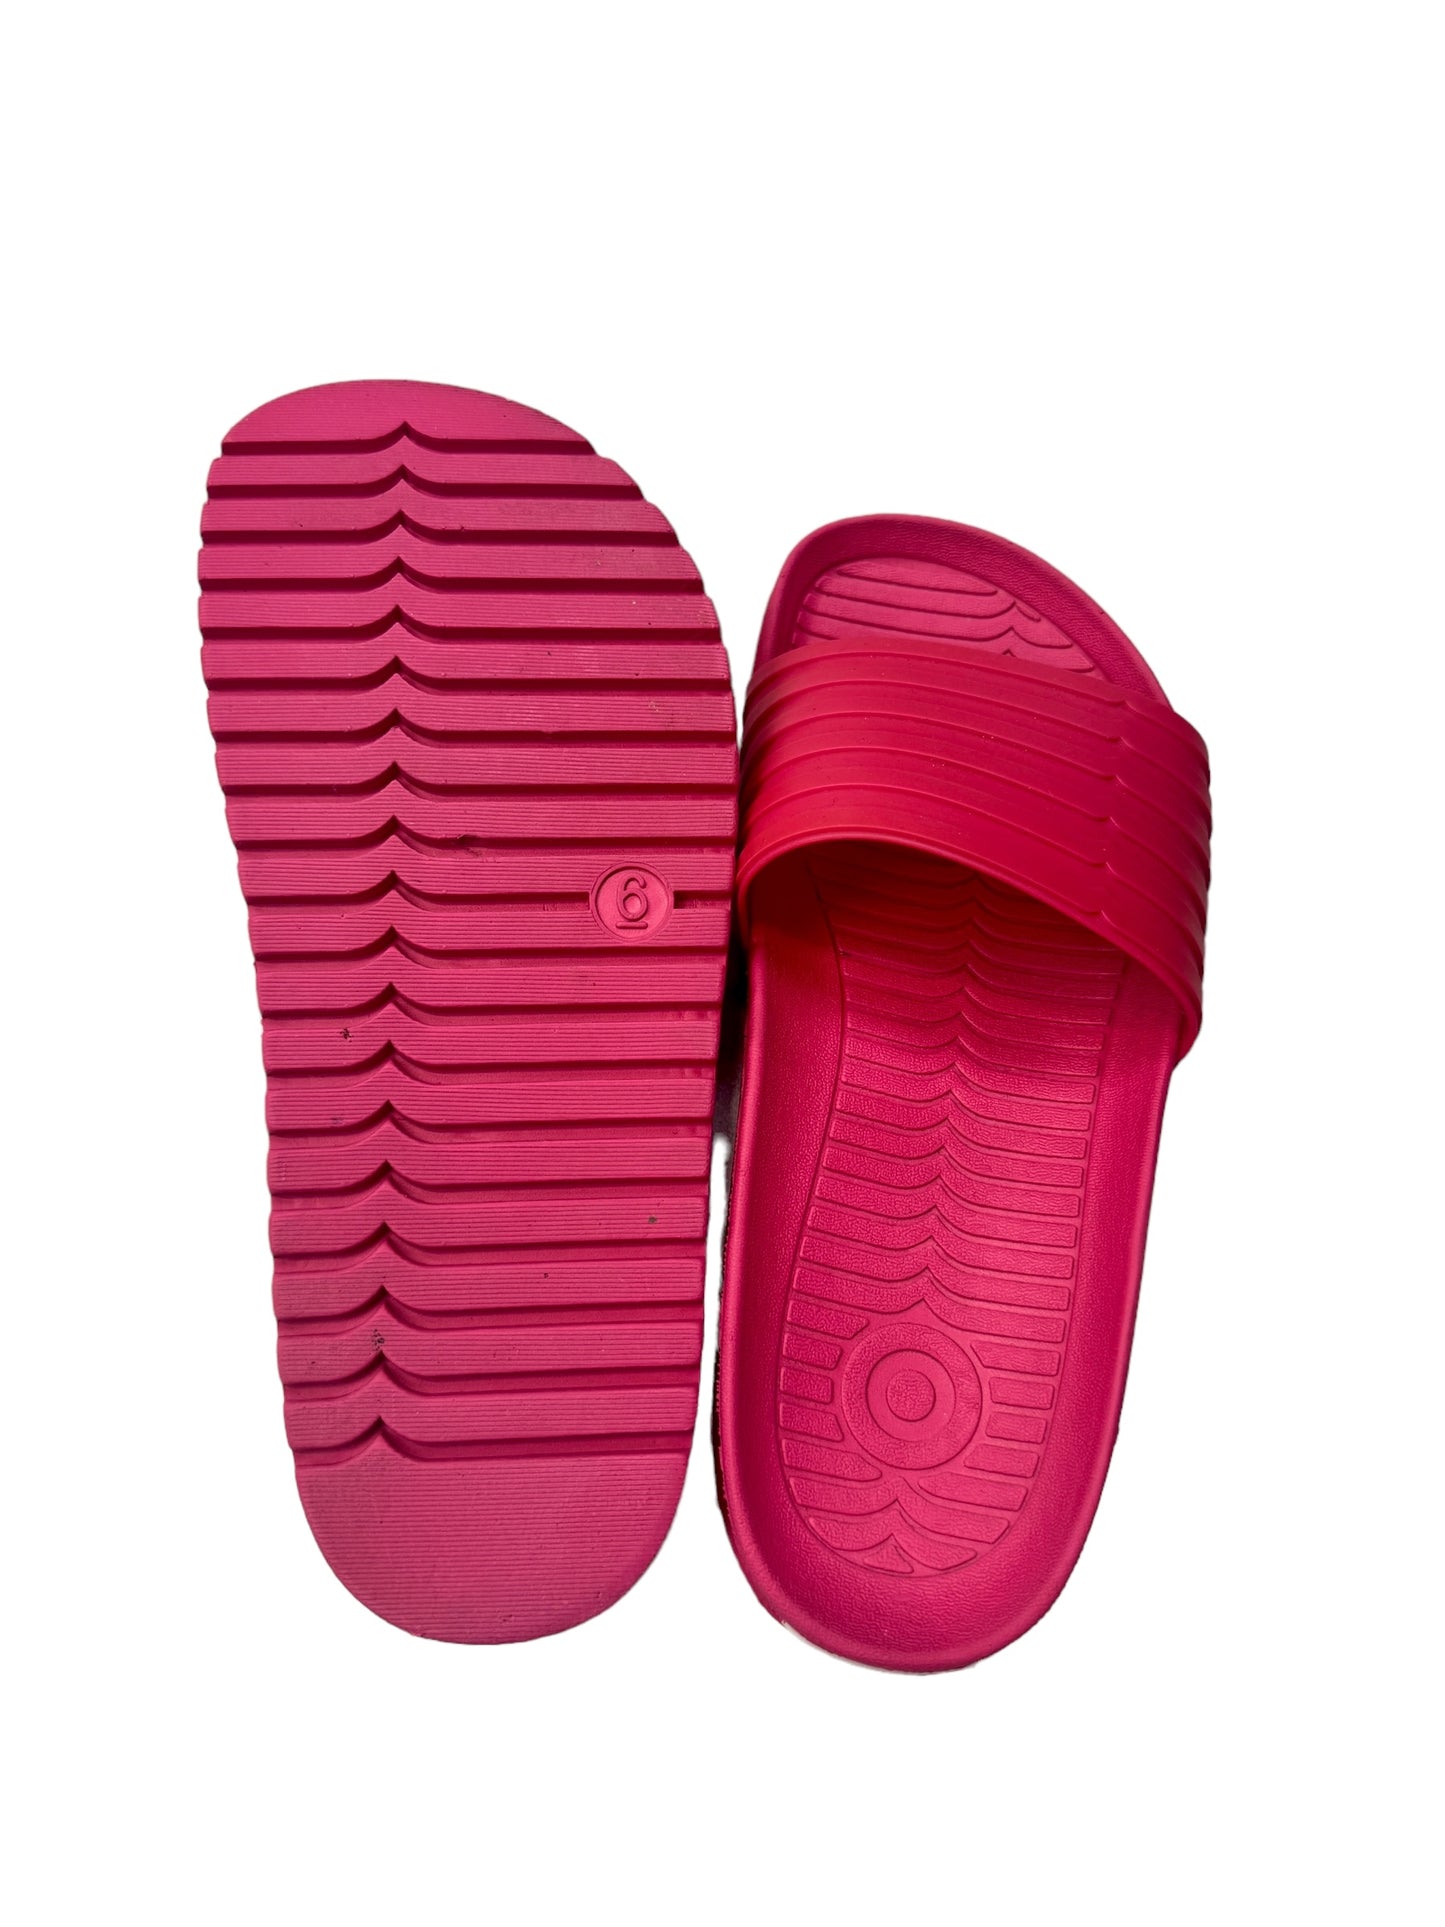 Shoes Flats By Target-designer  Size: 6